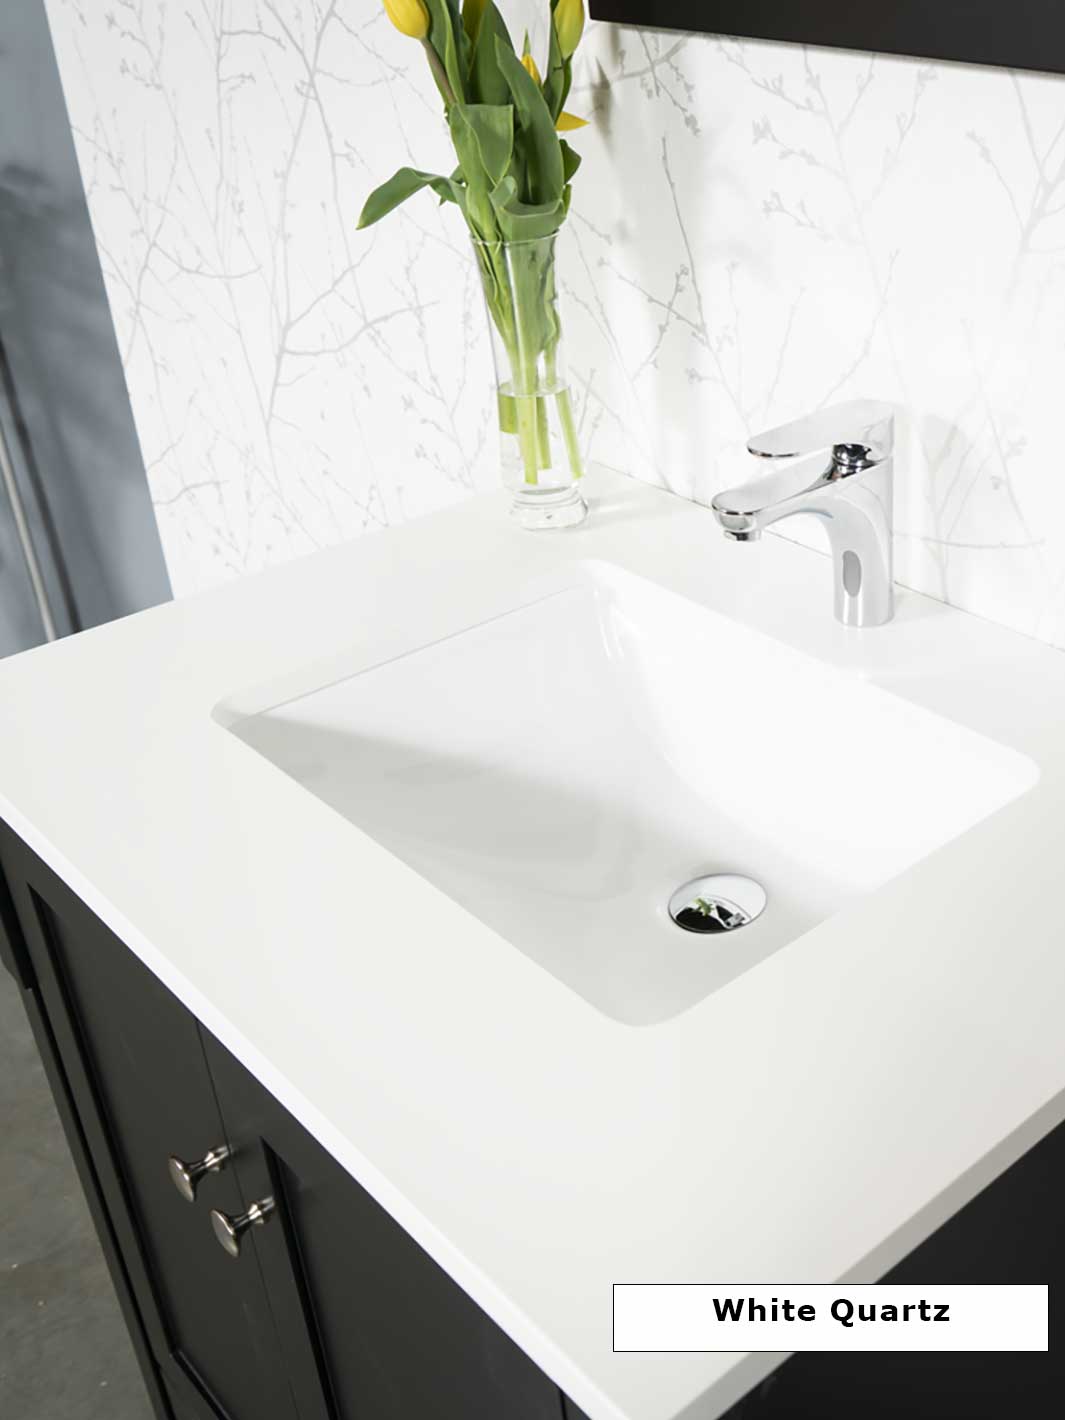 white quartz counter with chrome faucet